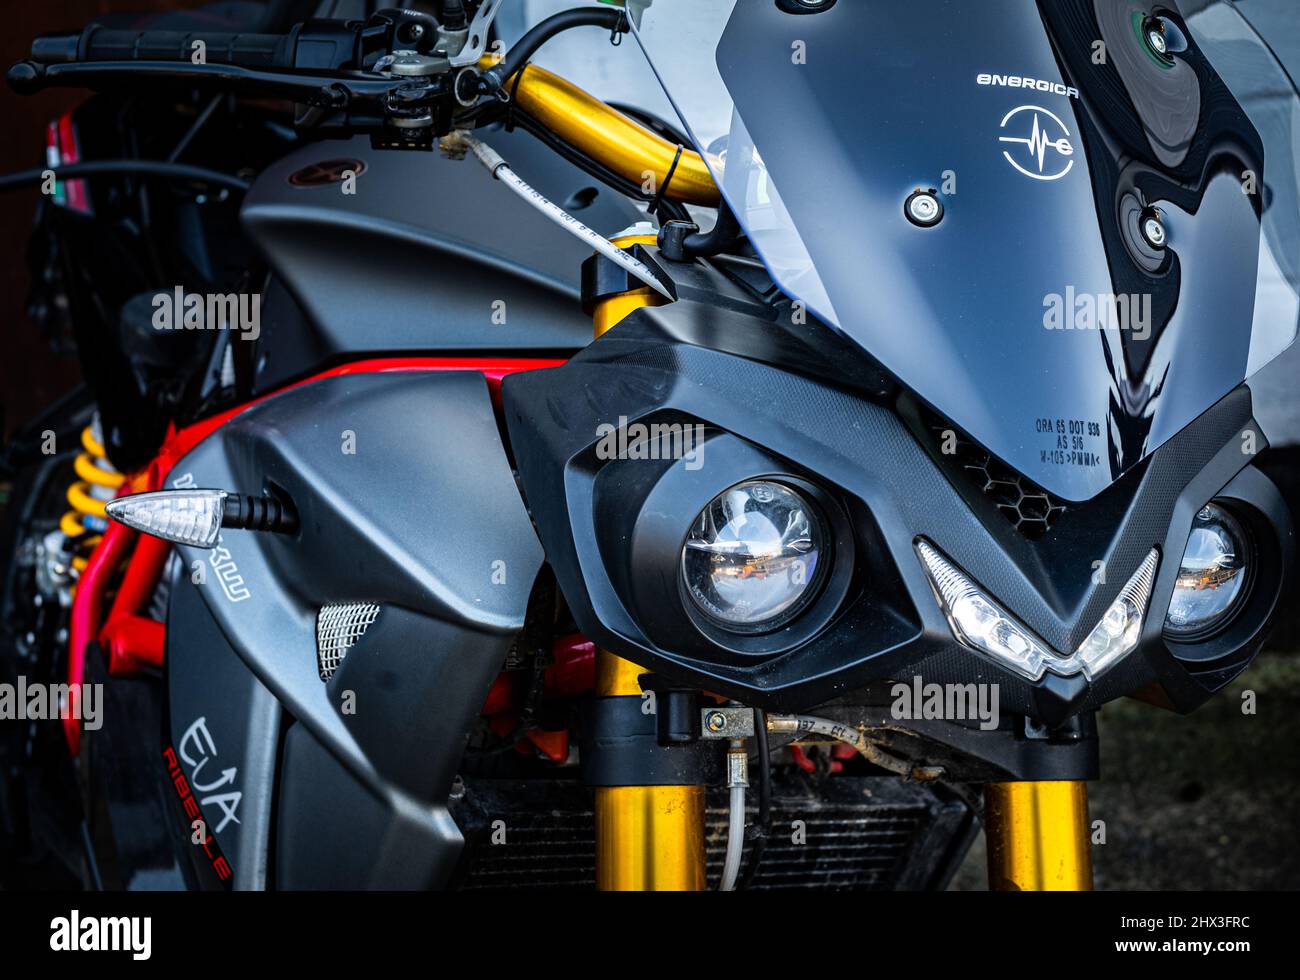 Gran potente moto con parabrisas delantero o carenado Fotografía de stock -  Alamy